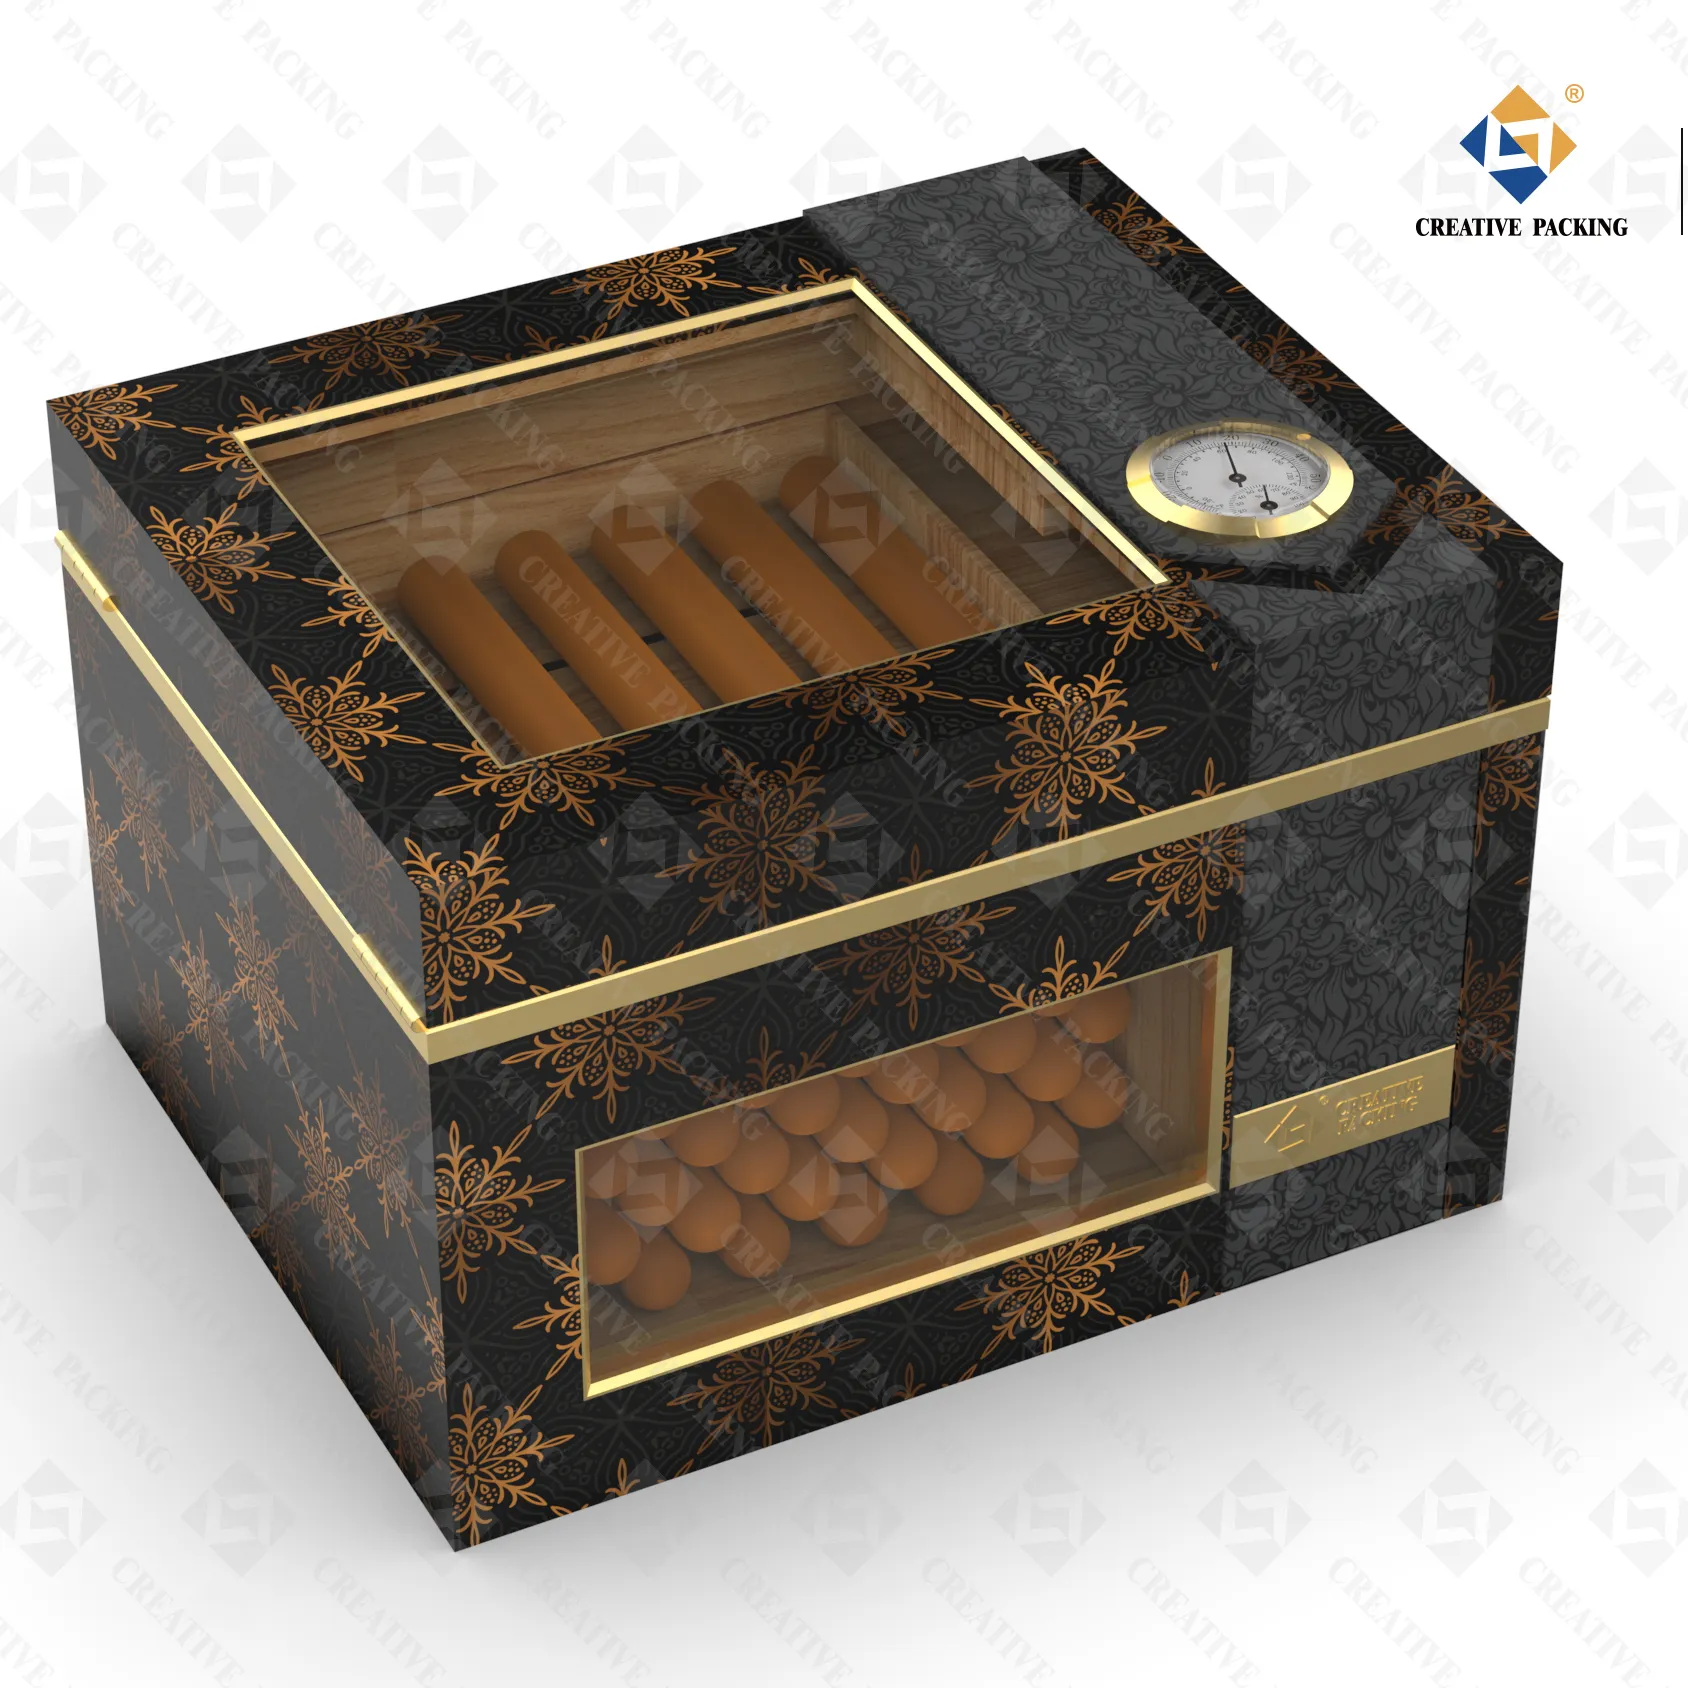 Creativepacking ซิการ์ไม้ซีดาร์สเปน,กล่องซิการ์ฝากระจกเก็บซิการ์